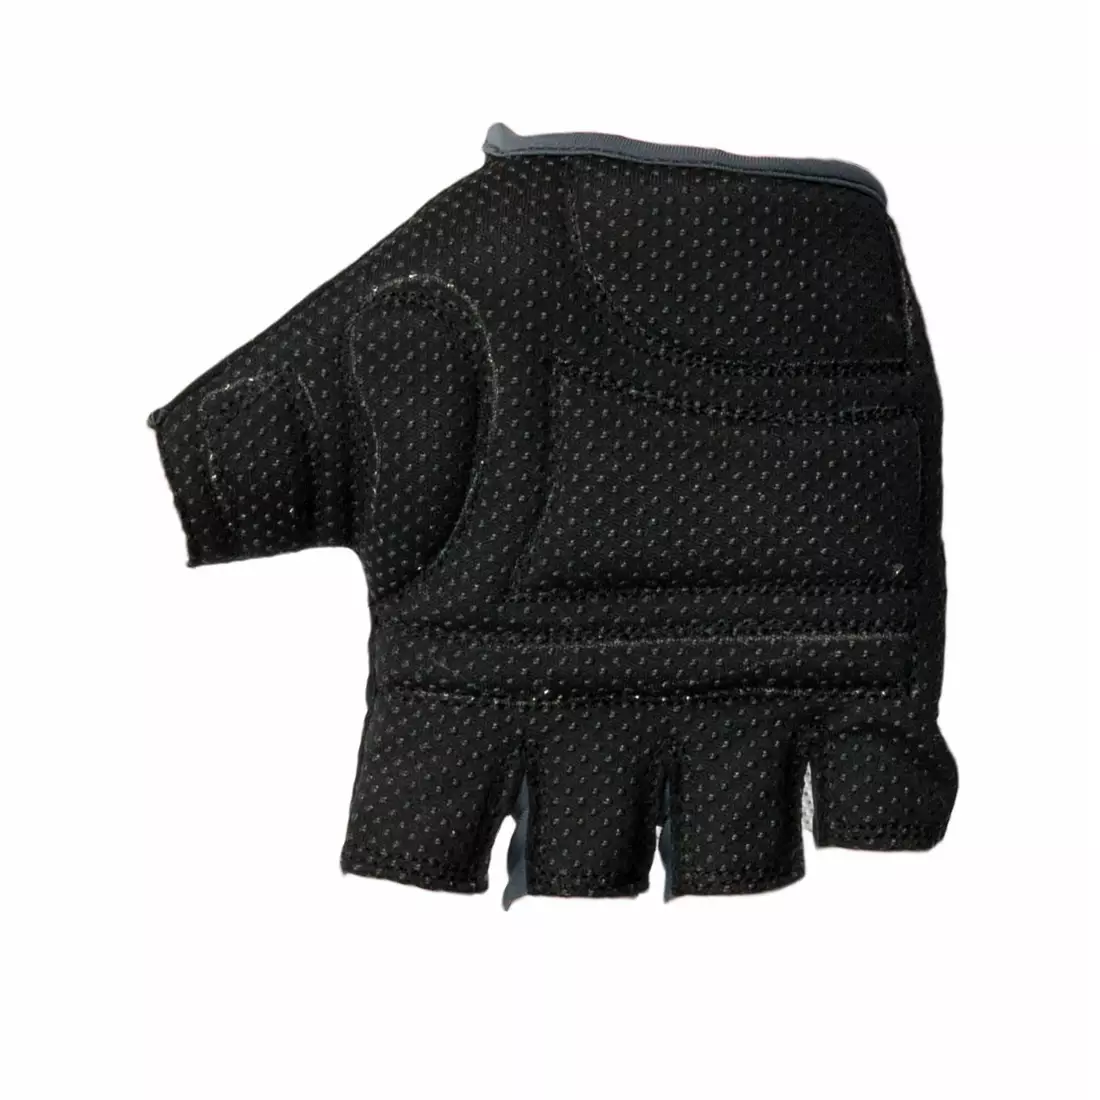 POLEDNIK Handschuhe F3 NEW14 schwarz